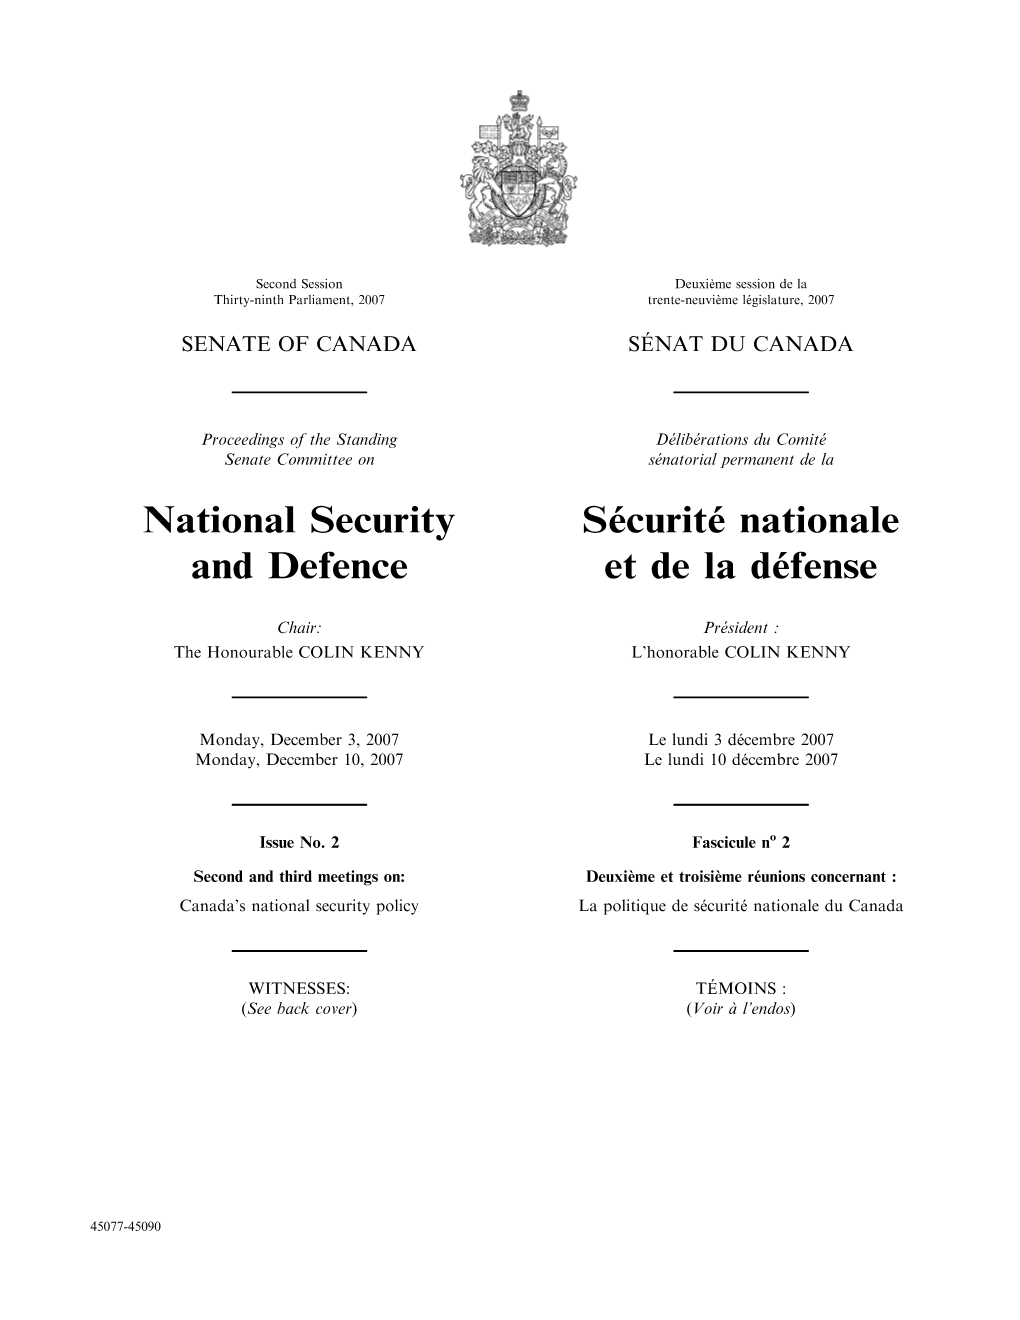 National Security and Defence Sécurité